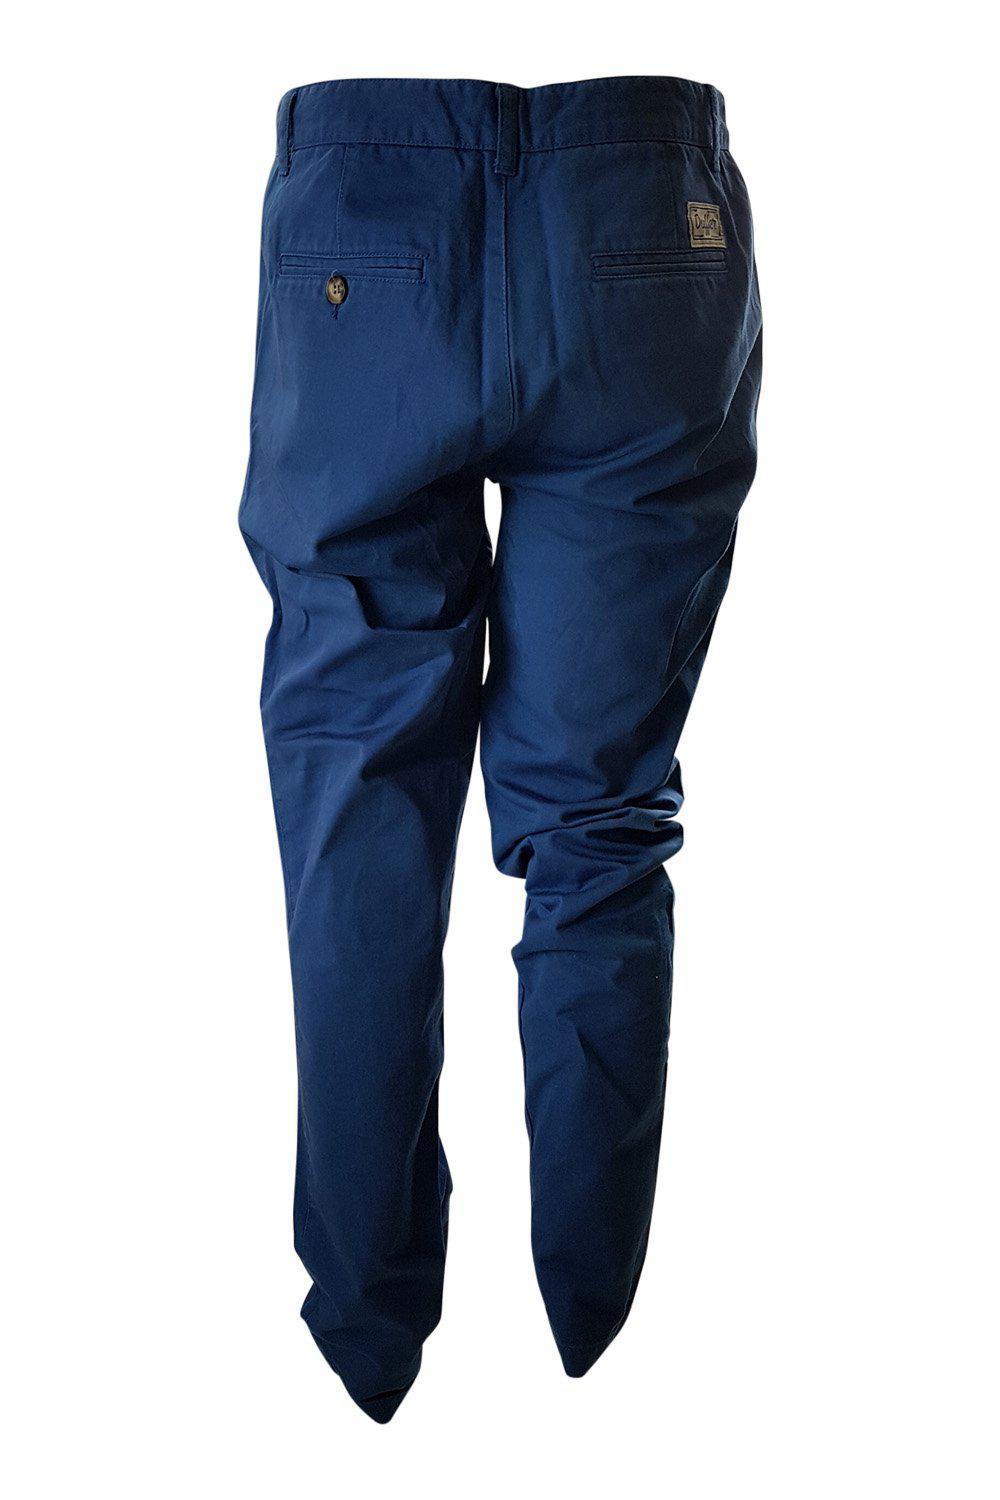 DUFFER Blue 100% Cotton Light Weight Denim Jeans (W34 L33)-Duffer-The Freperie